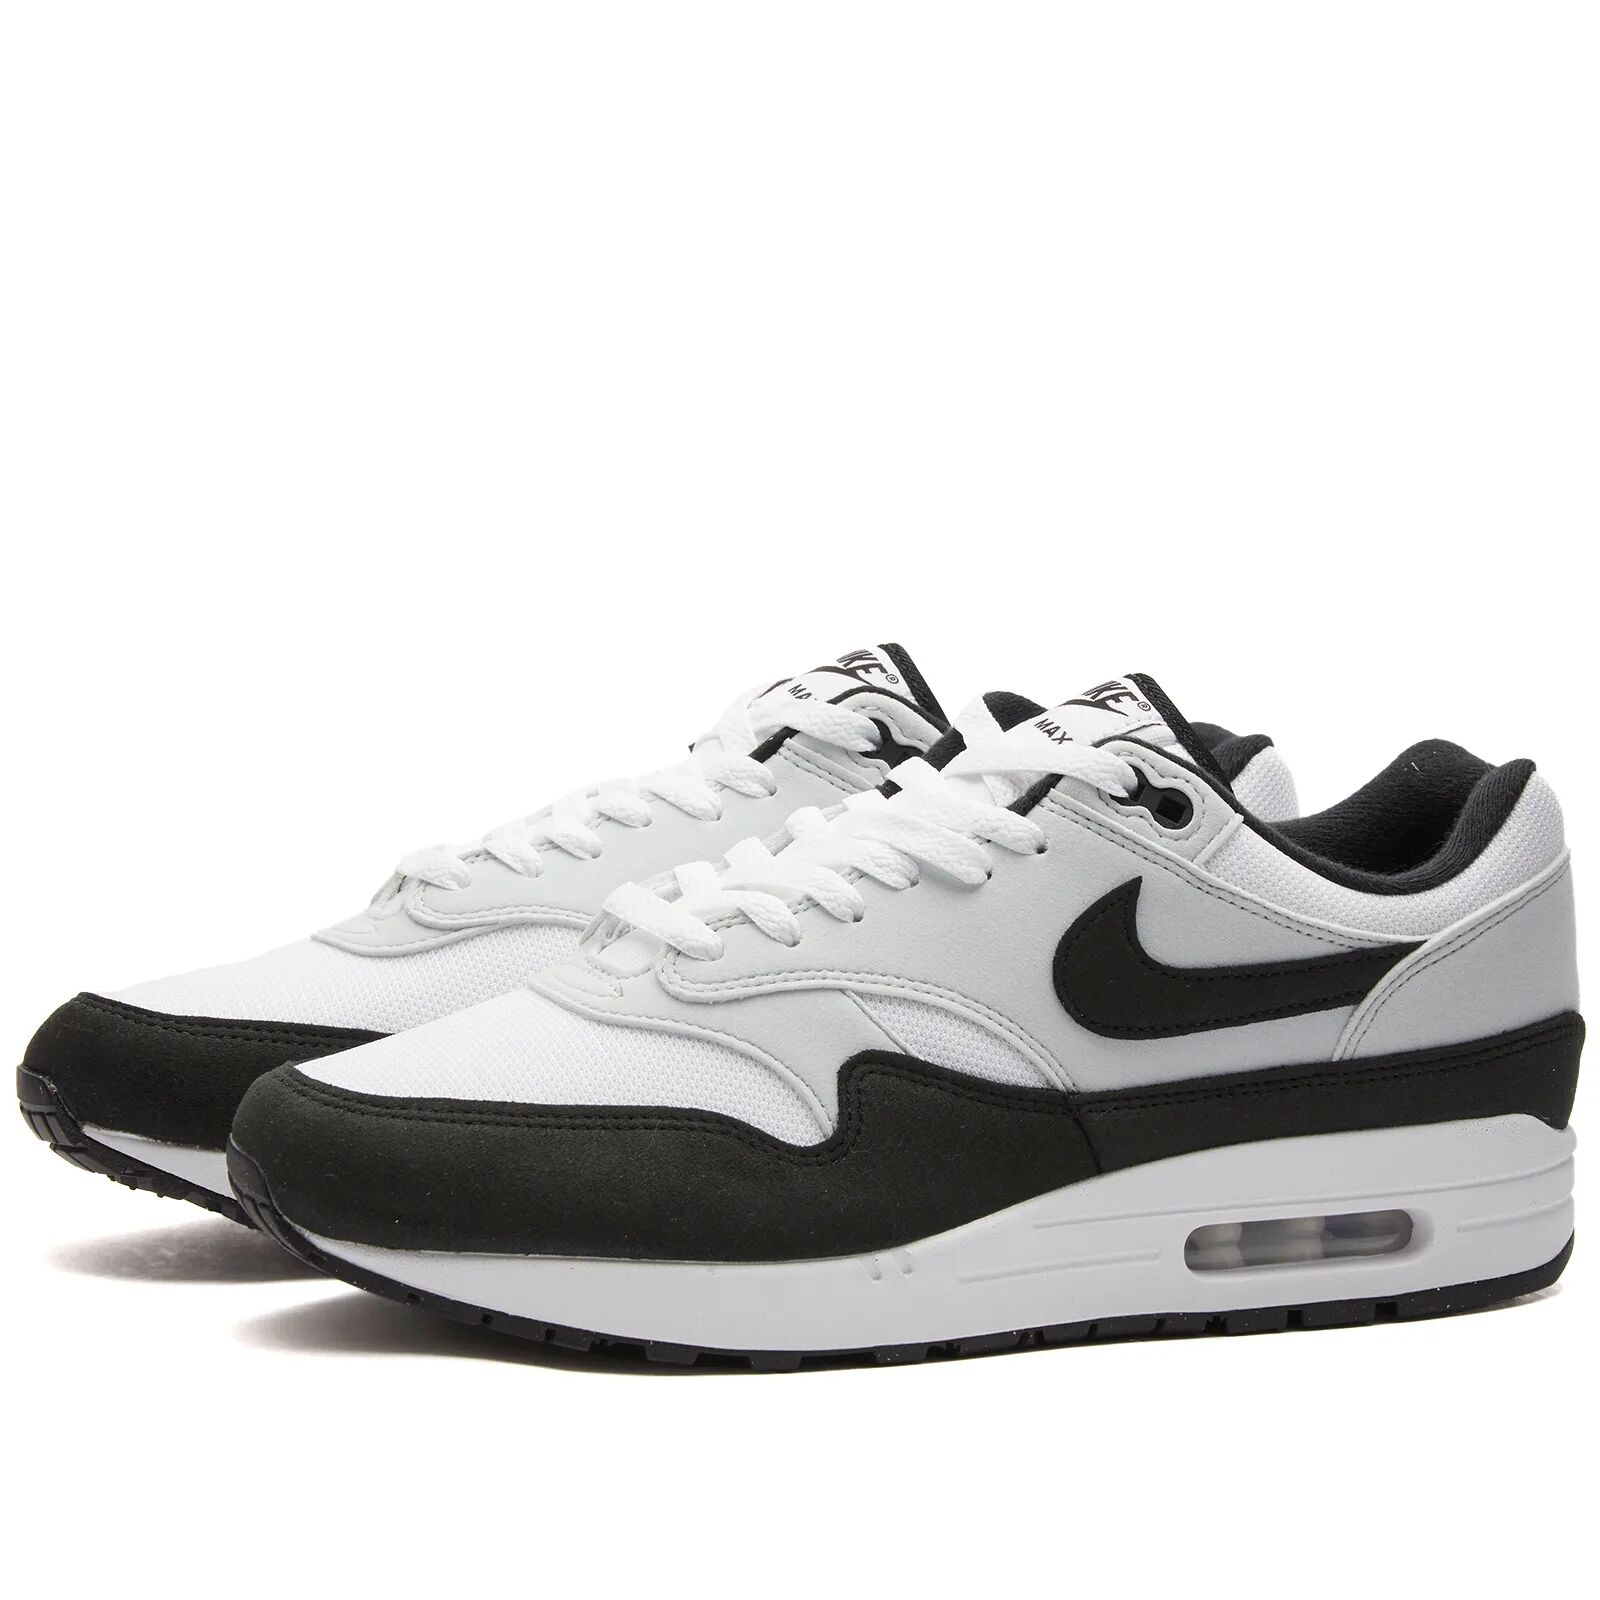 Nike Men's AIR MAX 1 Sneakers in White/Black/Pure Platinum, Size UK 10.5